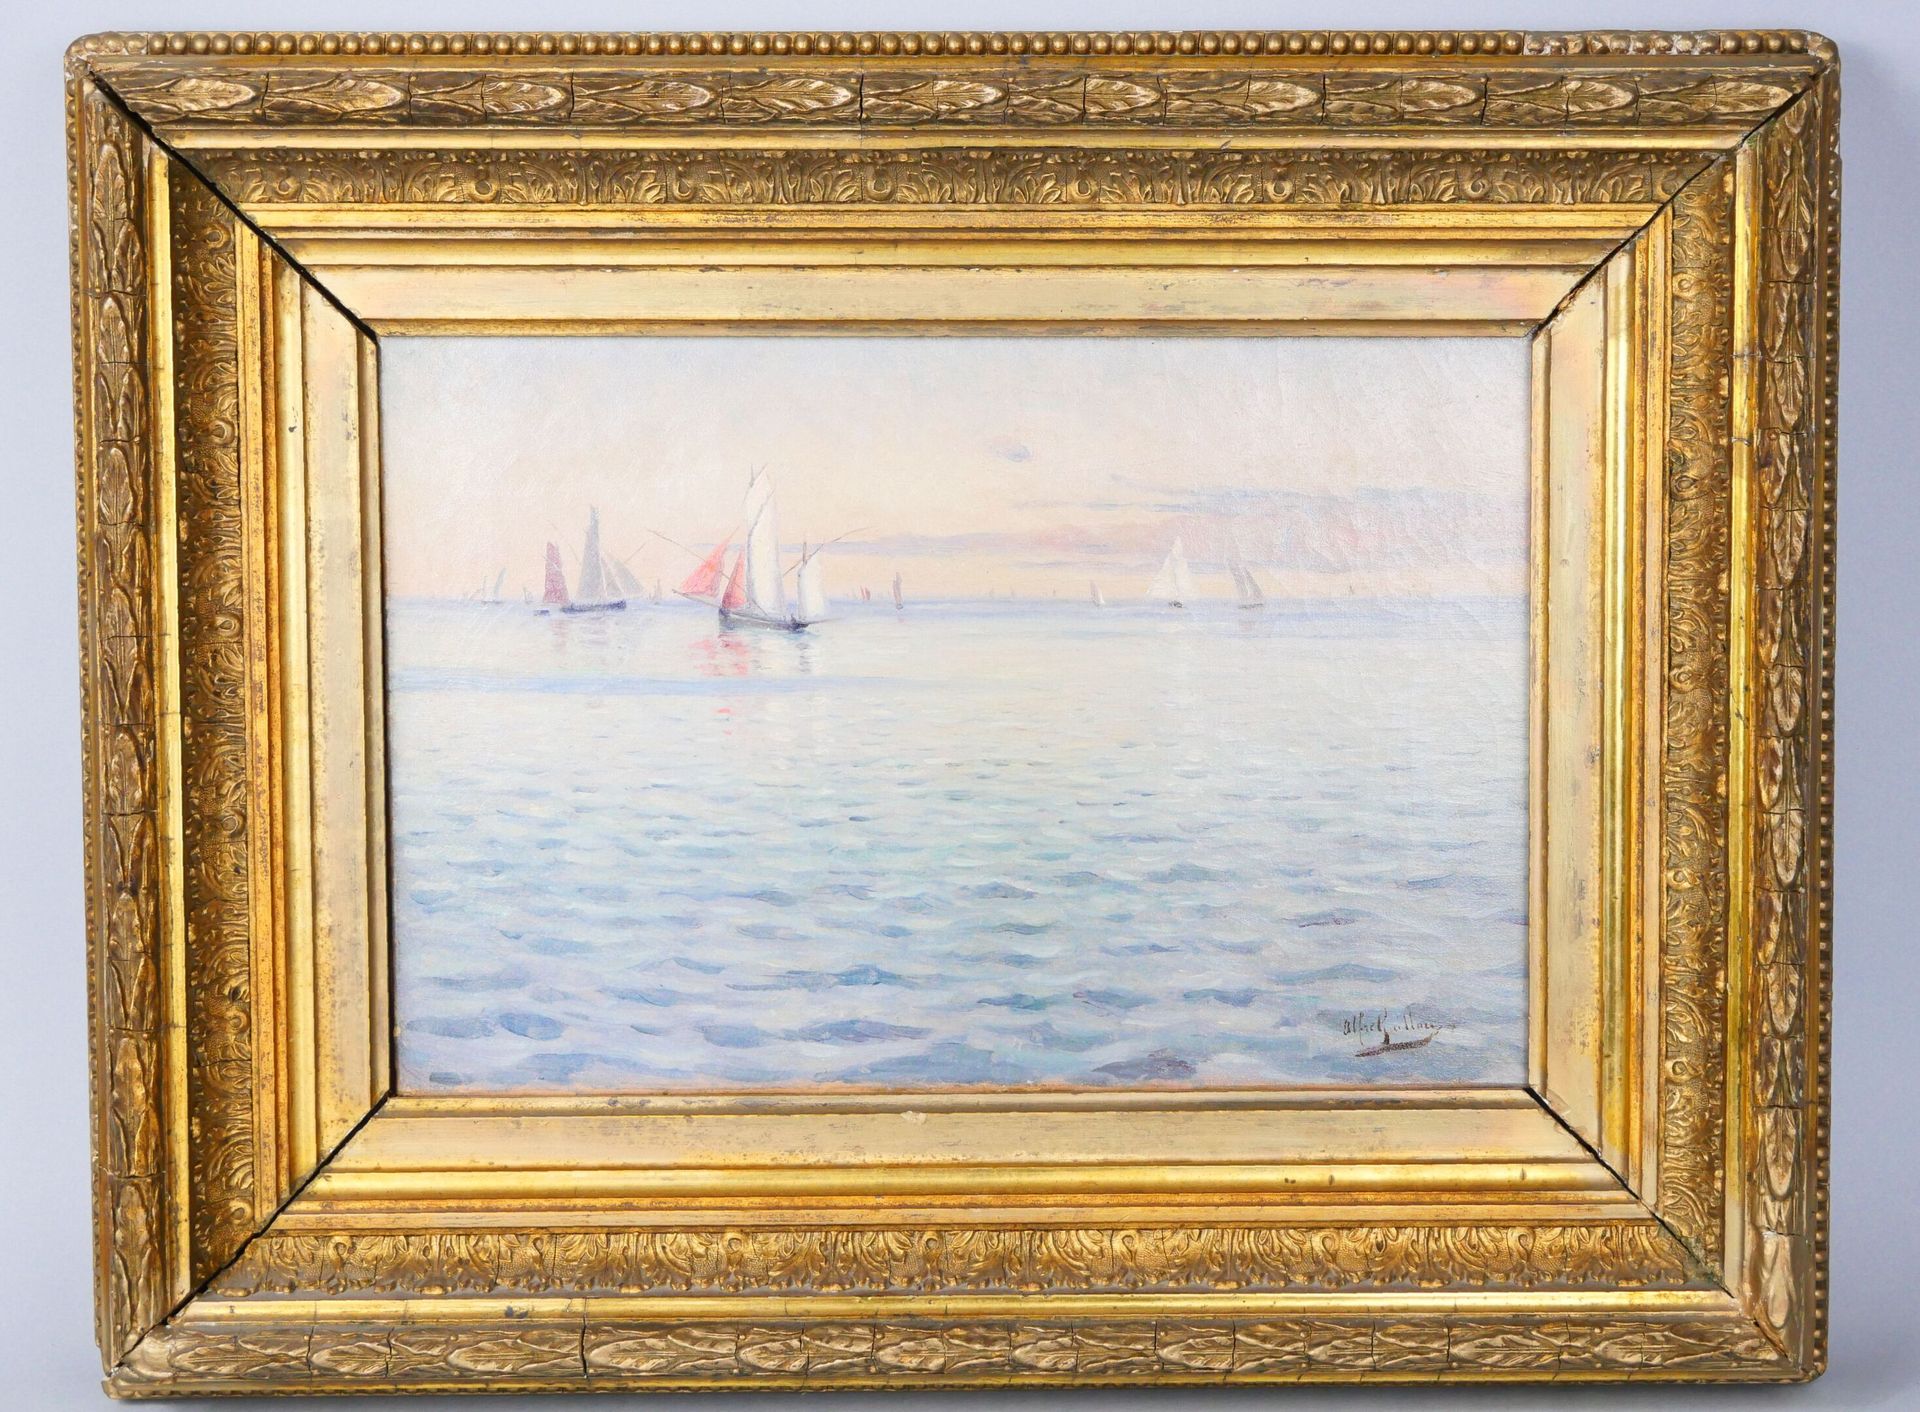 Null 阿尔弗雷德-吉约(1844-1926)
海洋 
布面油画，右下角有签名
尺寸：21,5 x 33 cm 
带画框尺寸：37.5 x 48.5厘米

拍&hellip;